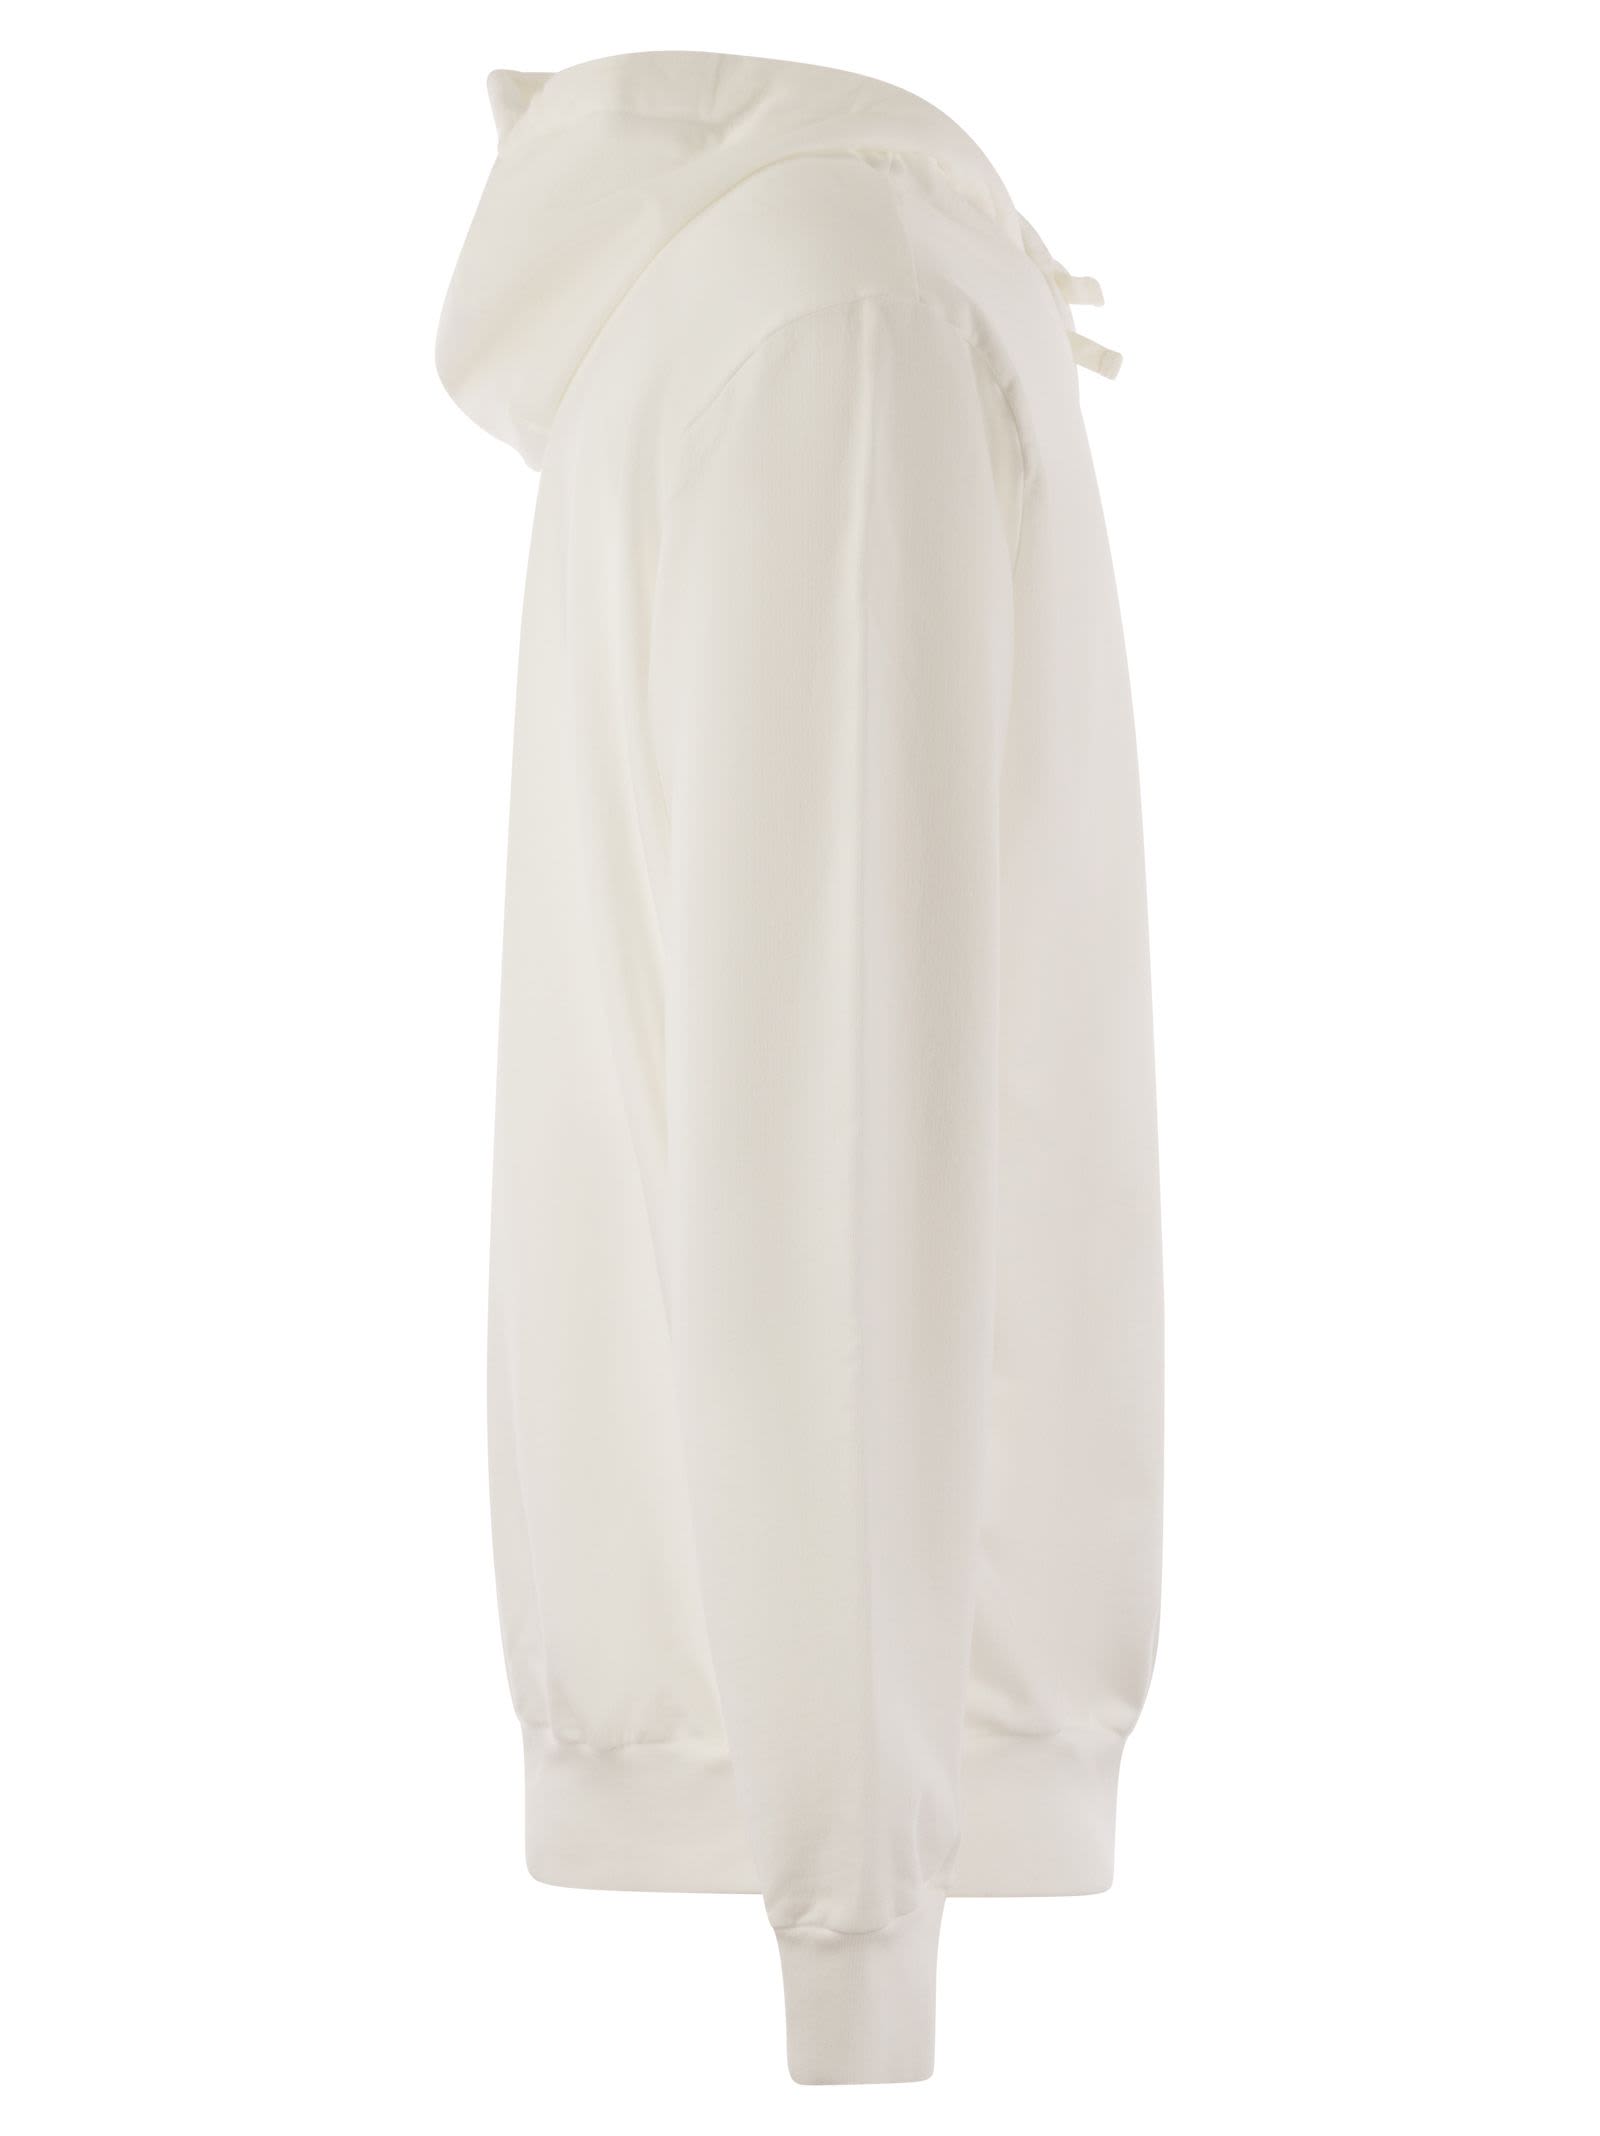 Shop Premiata Sweatshirt Pr352230 With Hood In White